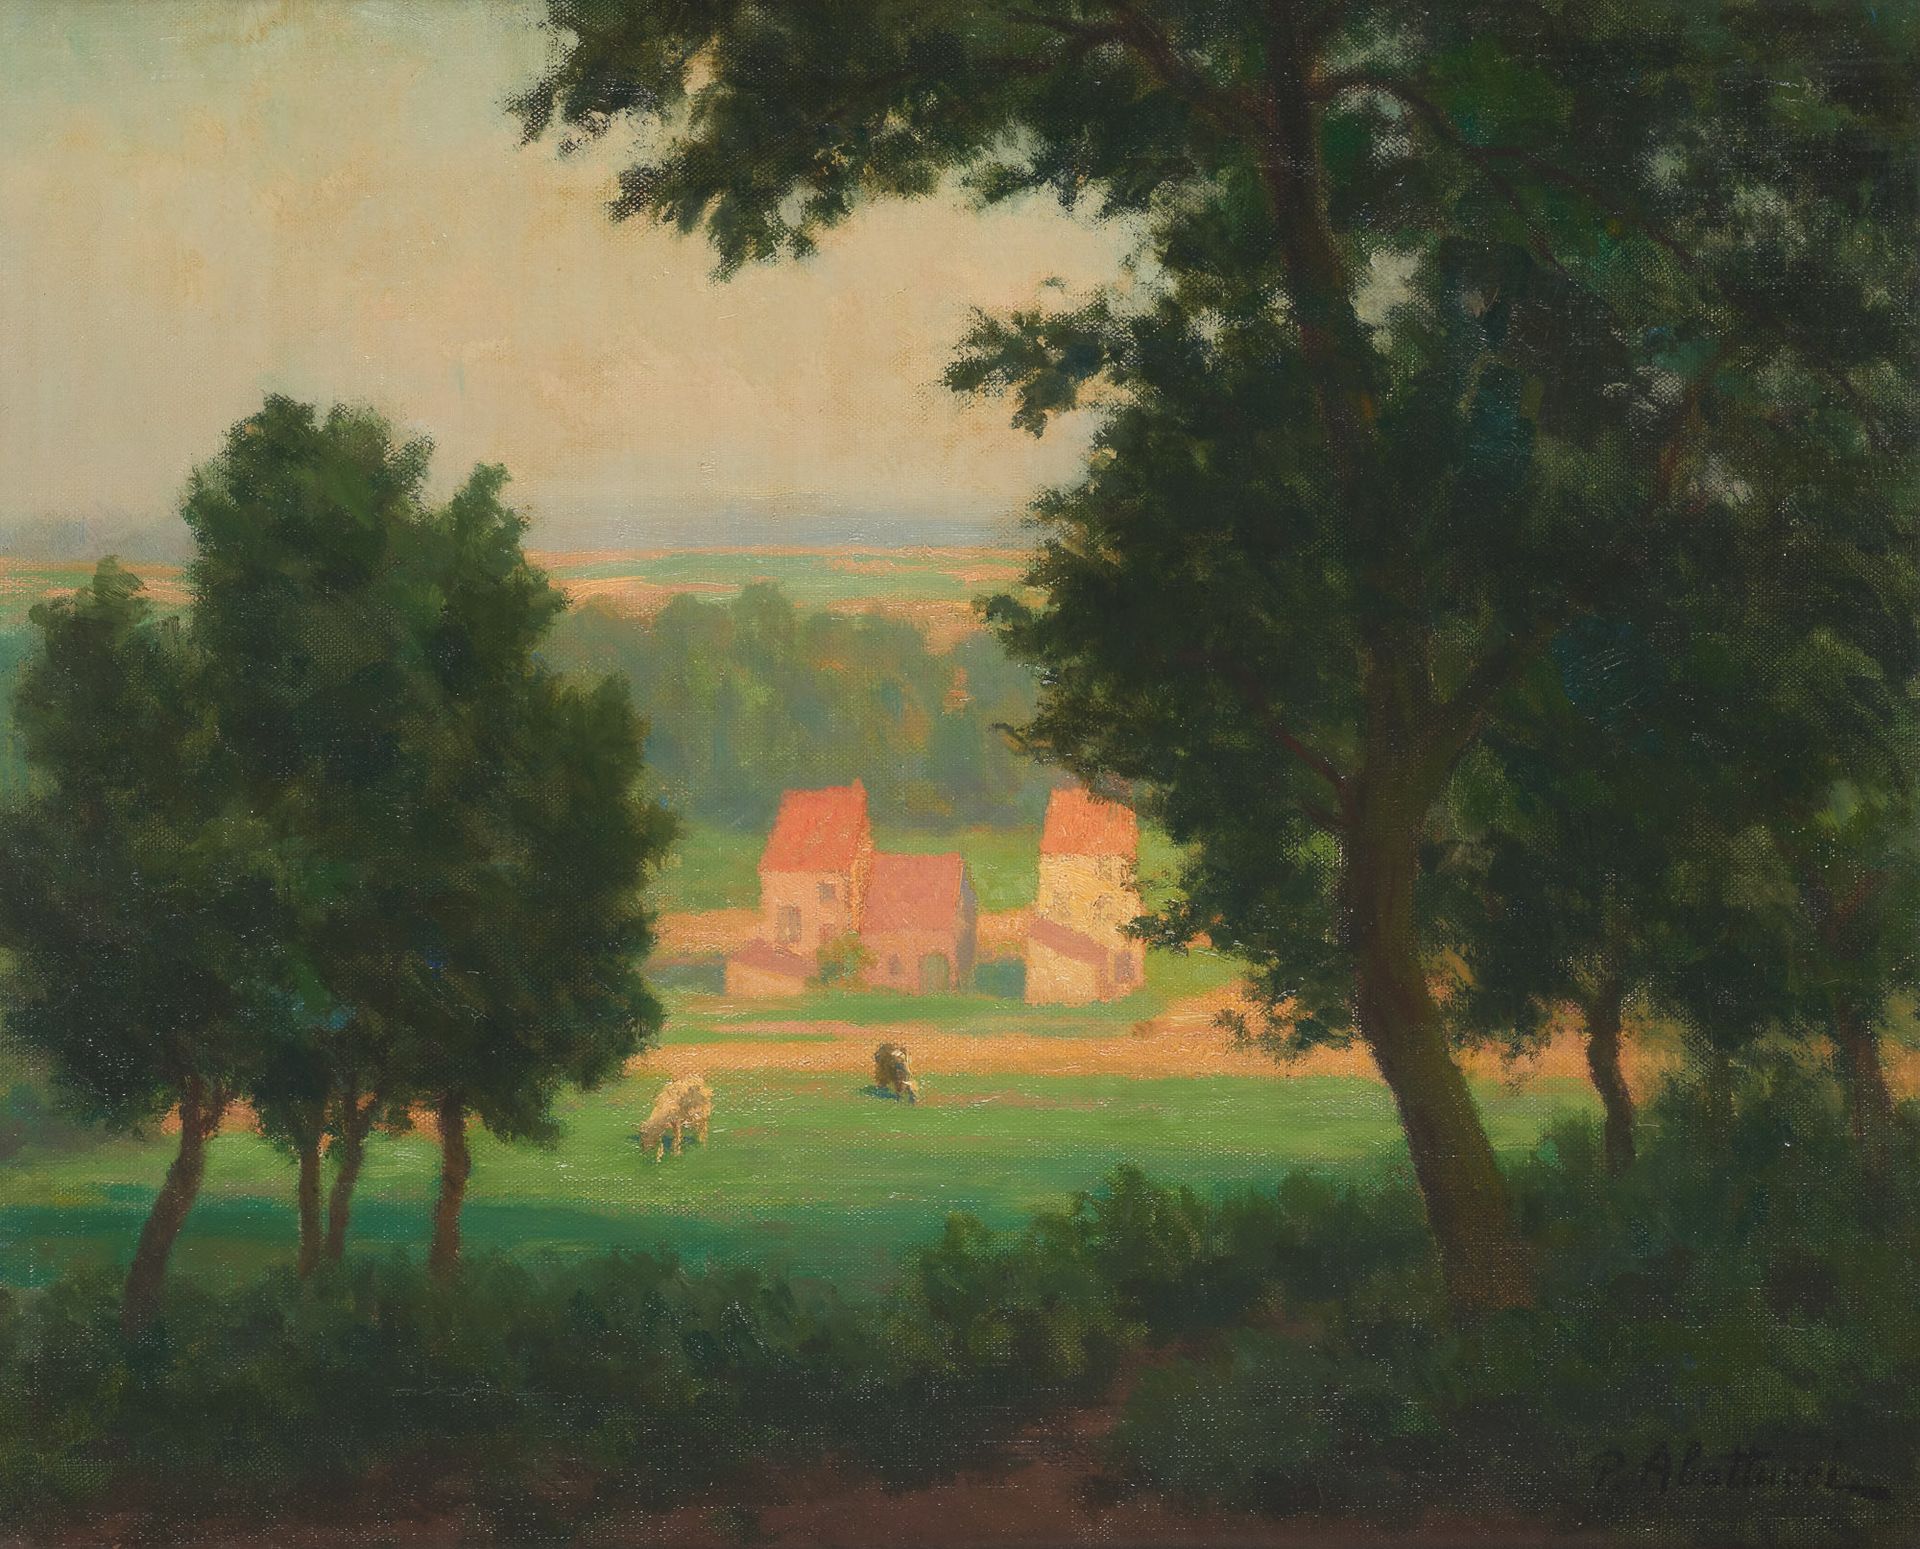 Pierre ABATUCCI École belge (1871-1942) Óleo sobre lienzo: "Casas soleadas".

Fi&hellip;